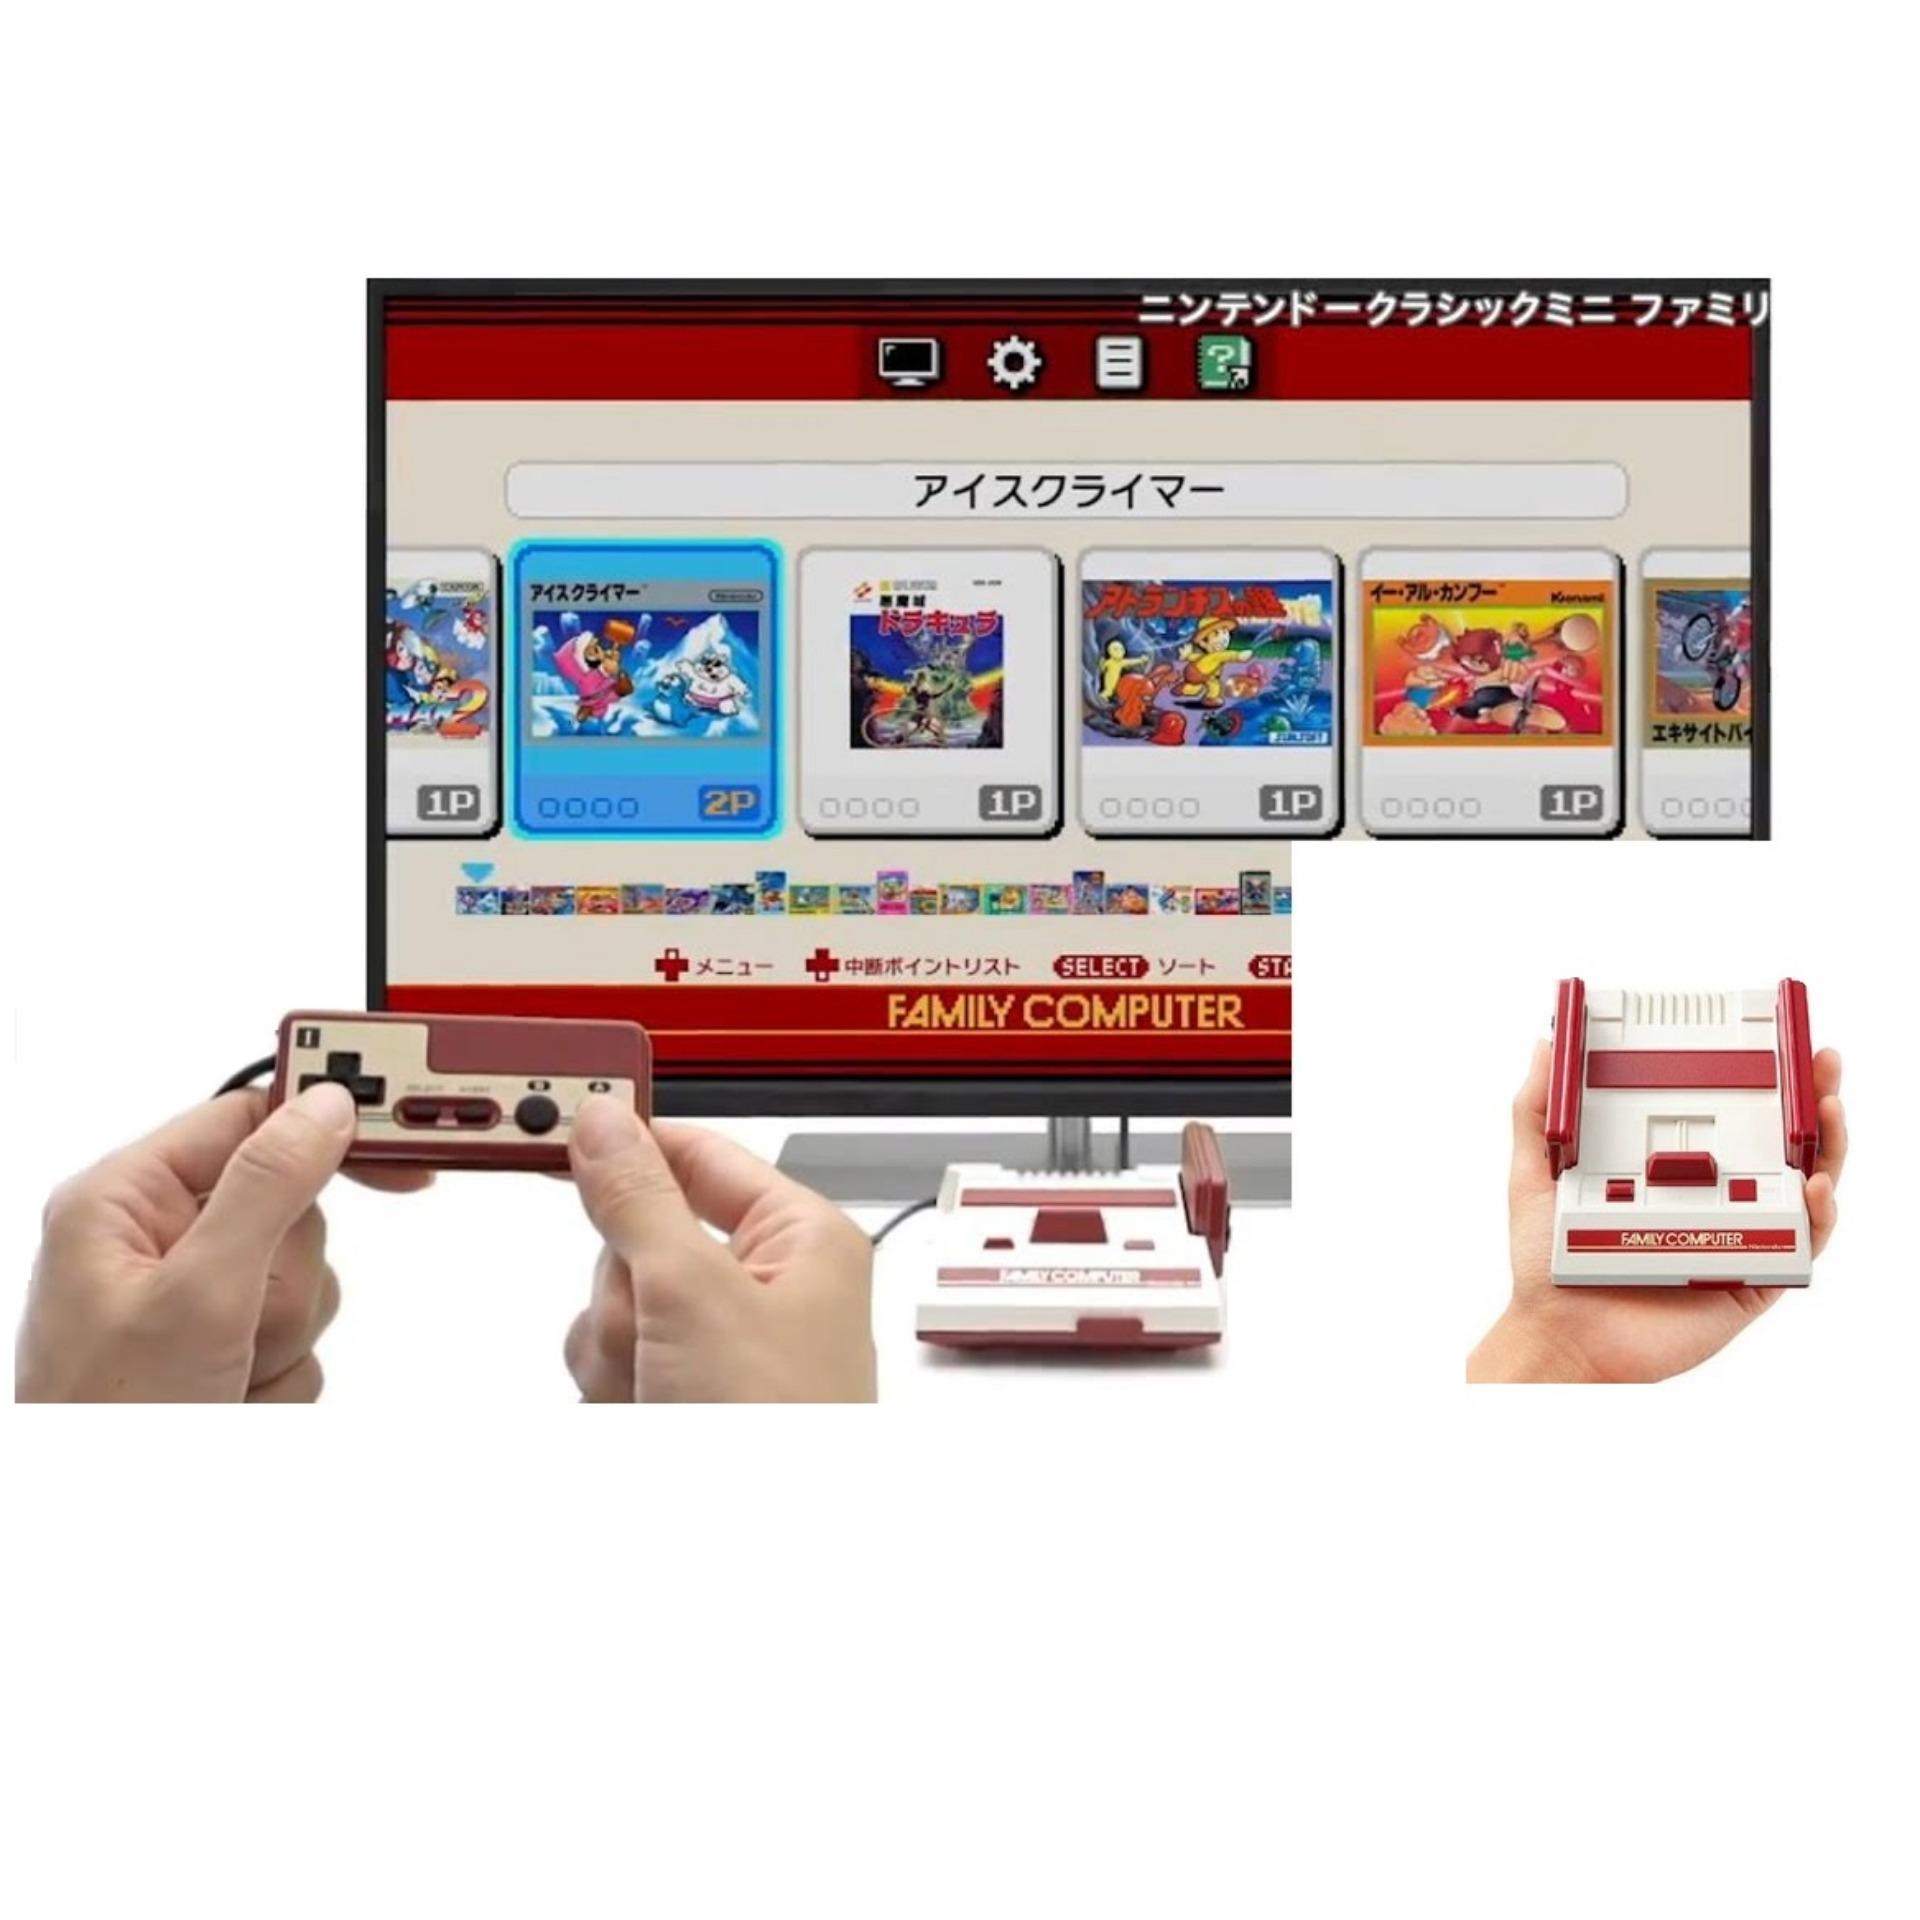 OFFICIAL Nintendo Entertainment System FAMICOM Mini NES MINI Family Computer Japan